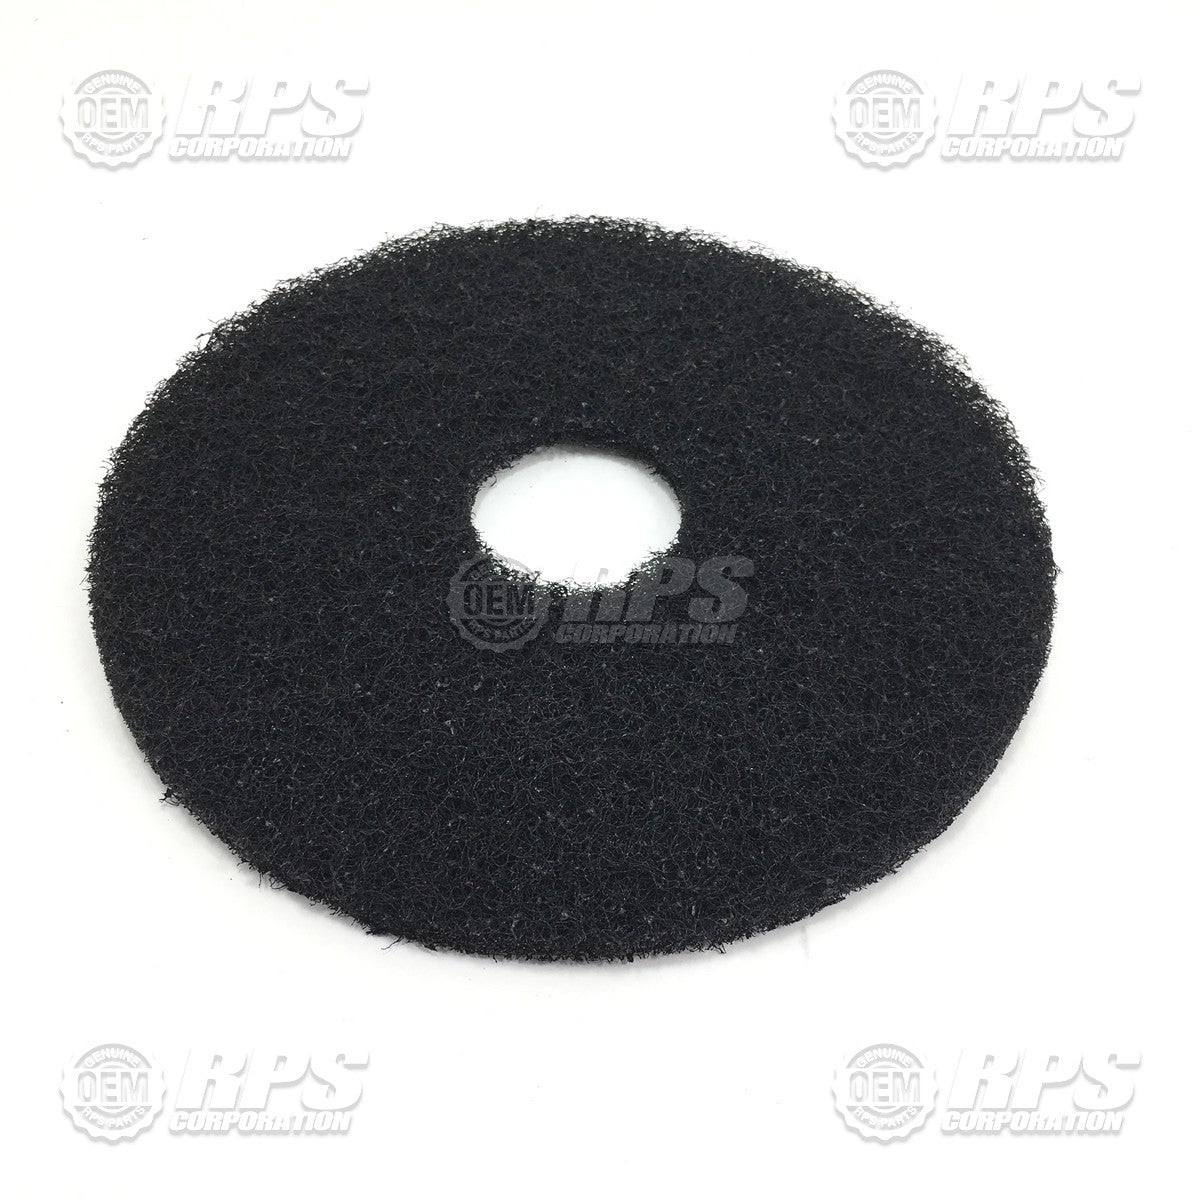 FactoryCat/Tomcat 14-422B, Floor Pads, 14" Black - Case of 5 pads